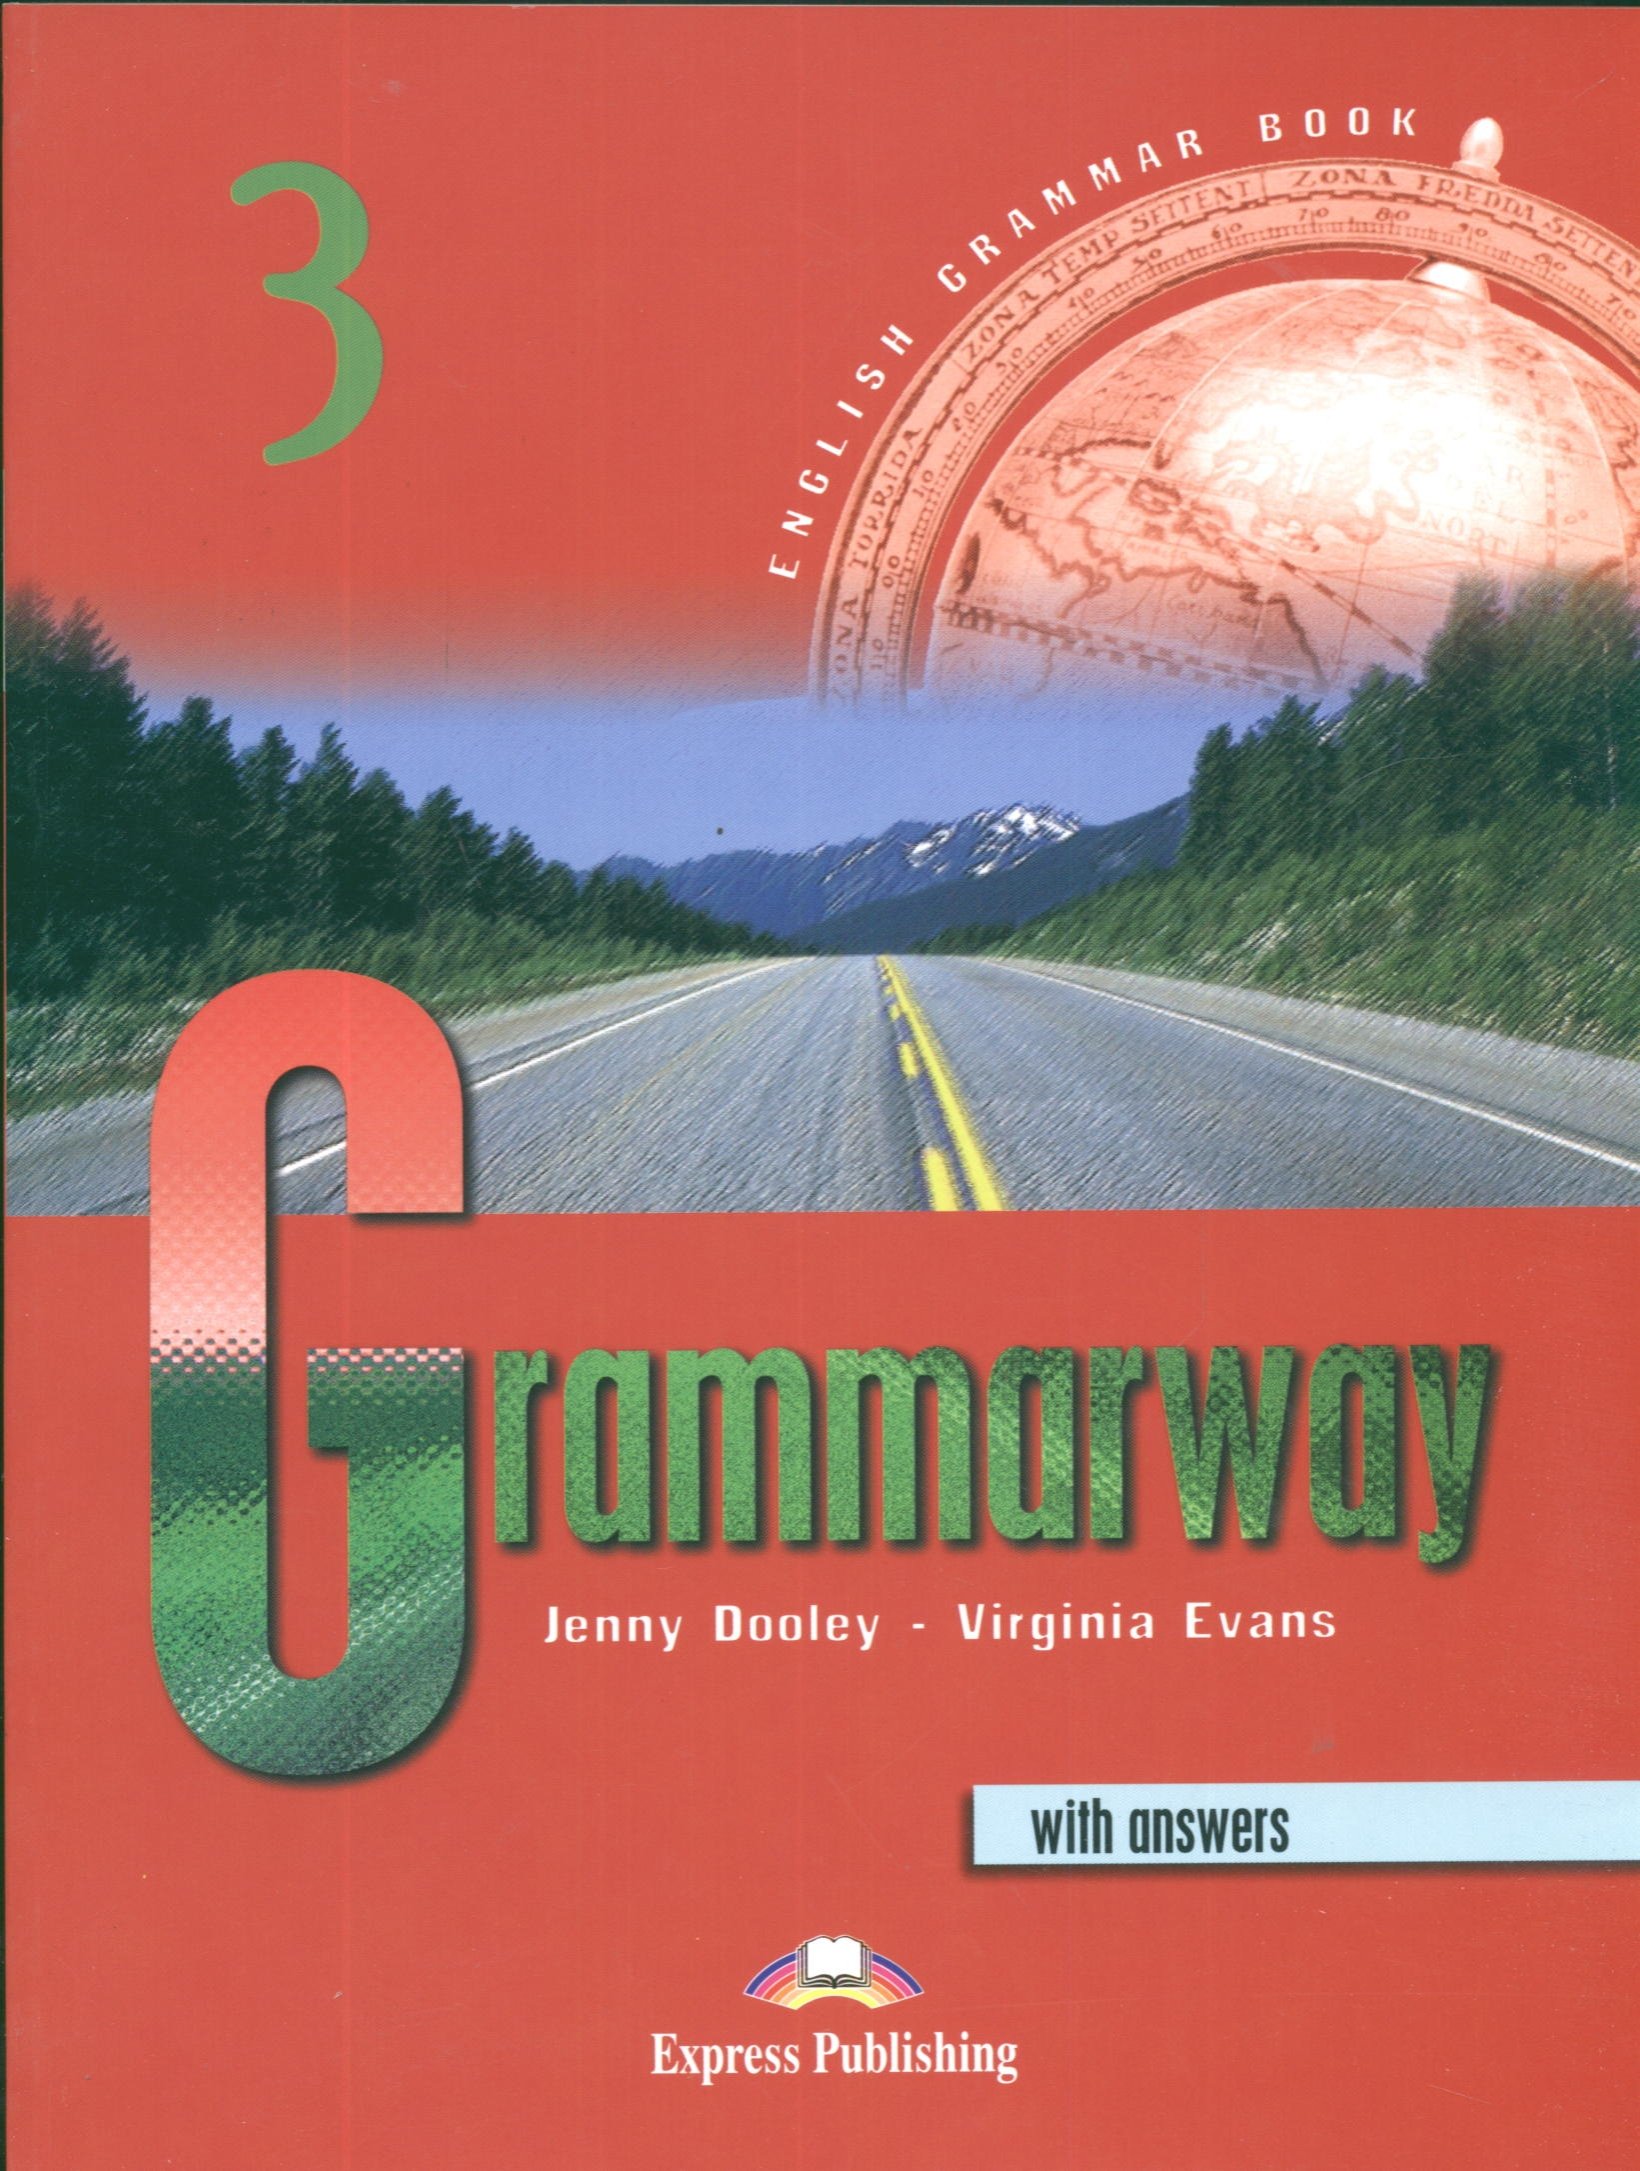 GRAMMARWAY 3 English Grammar Book with answers